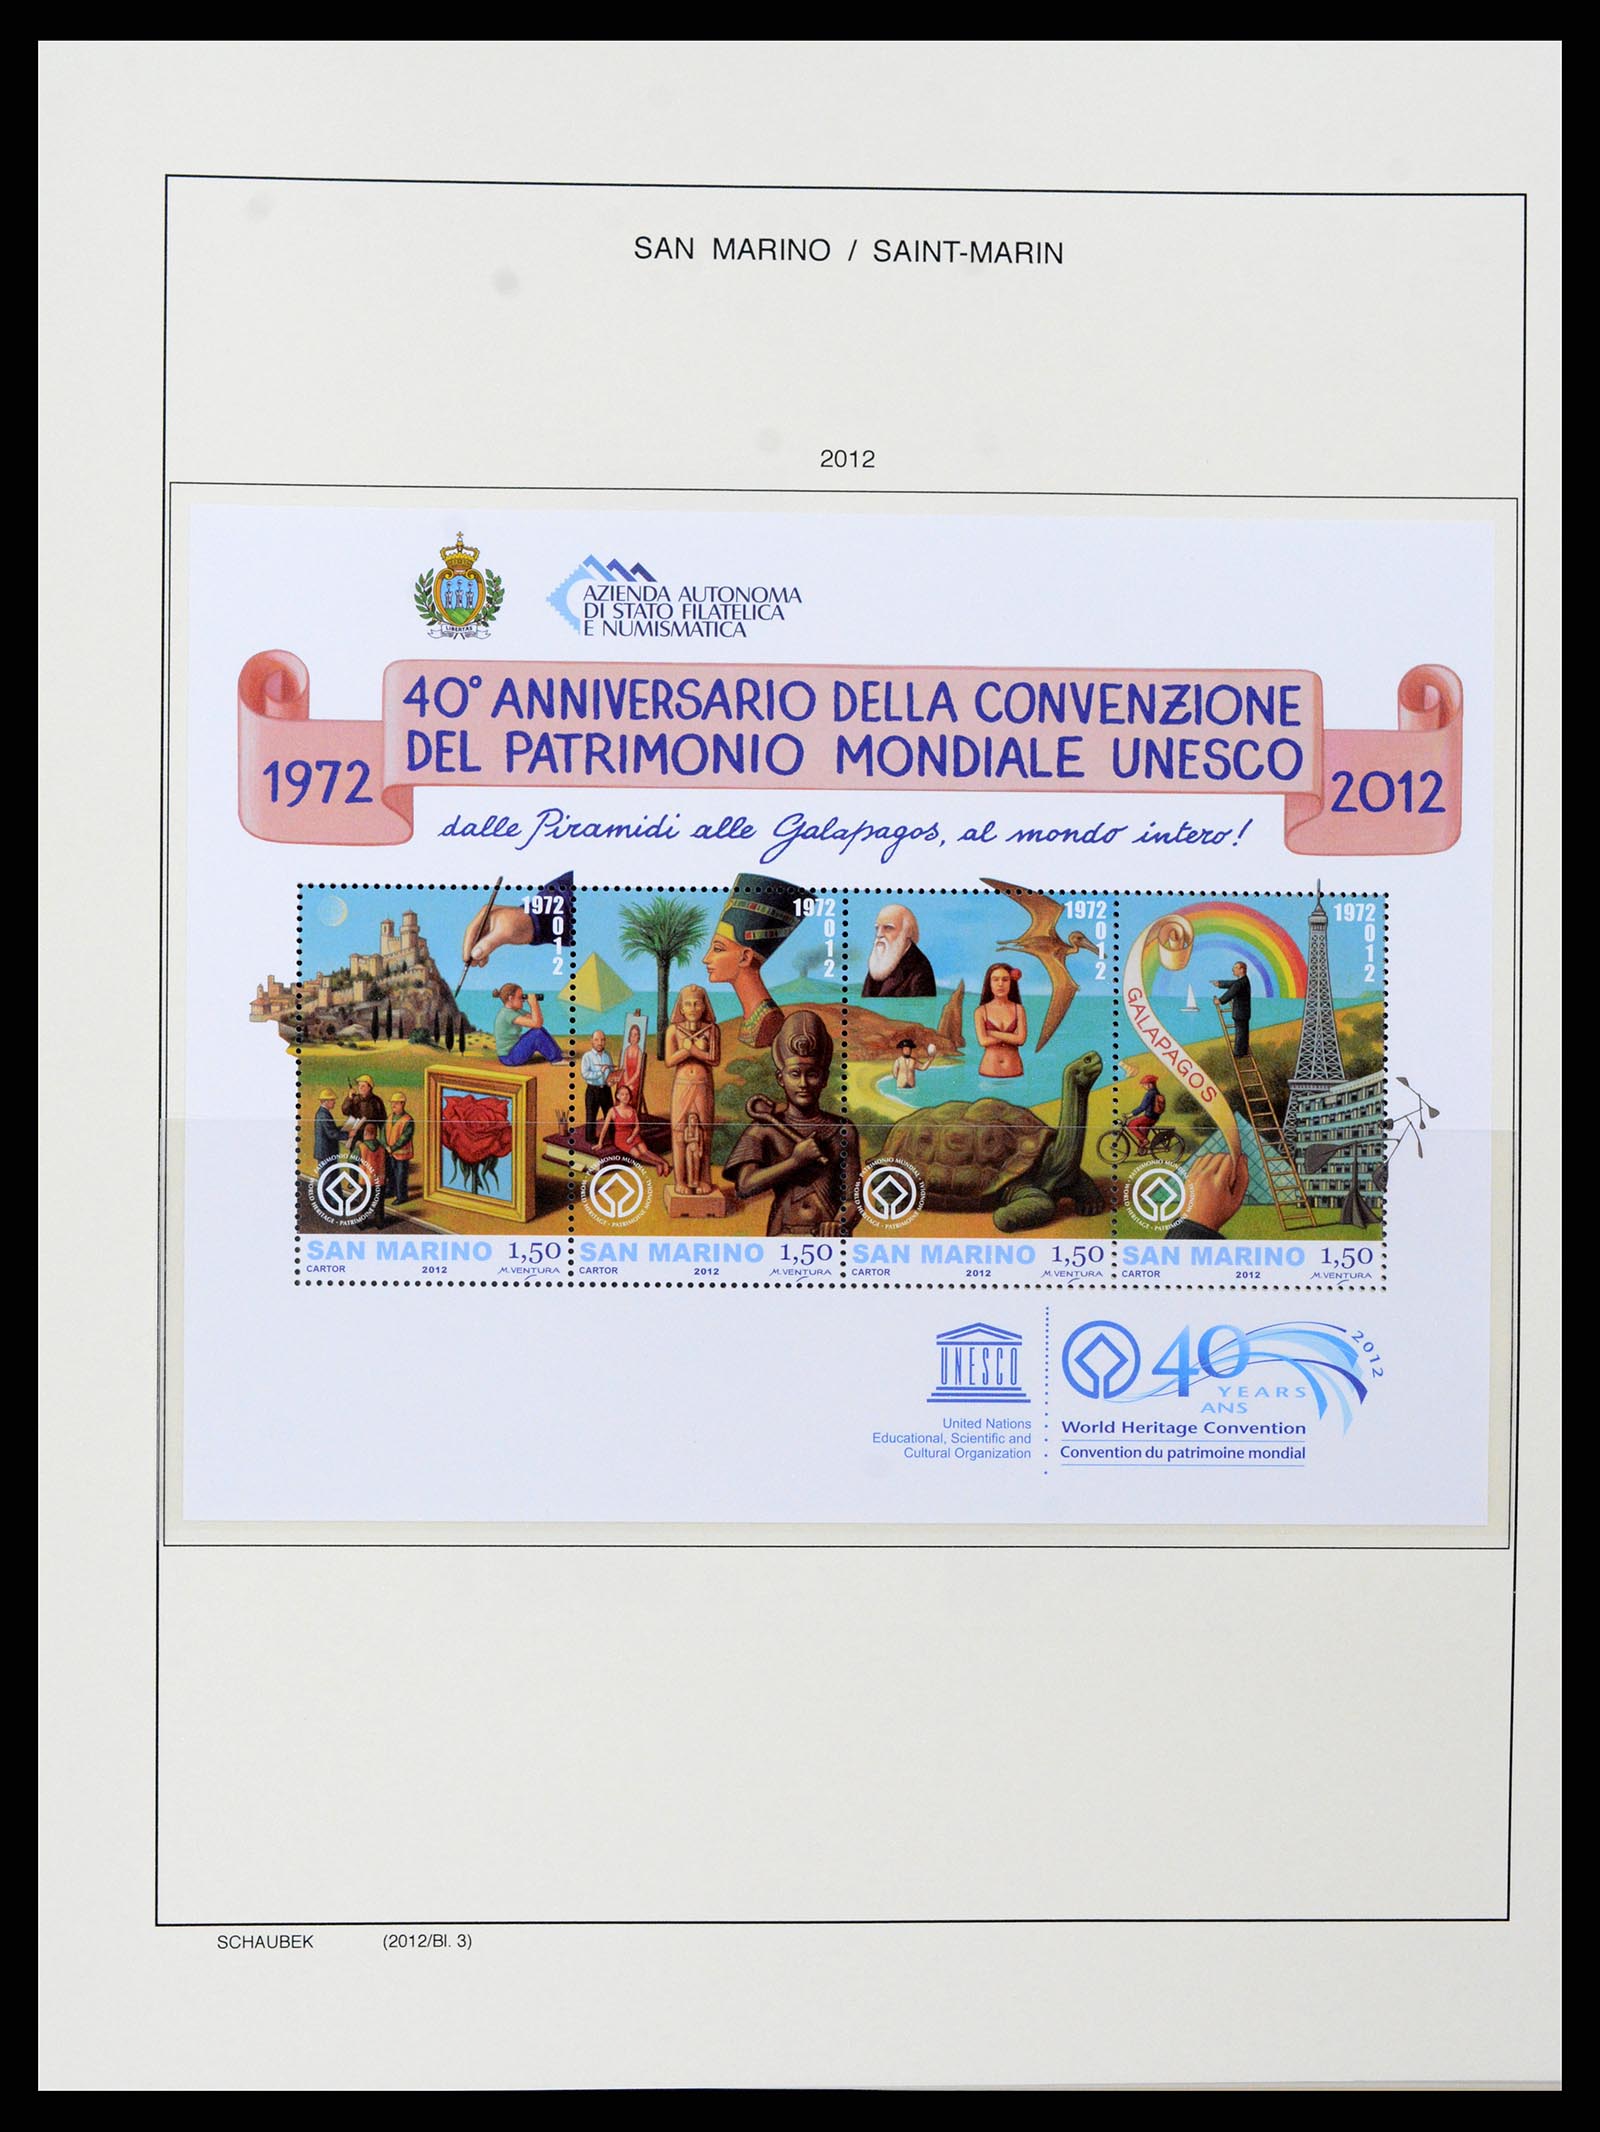 37556 265 - Stamp collection 37556 San Marino 1877-2017.